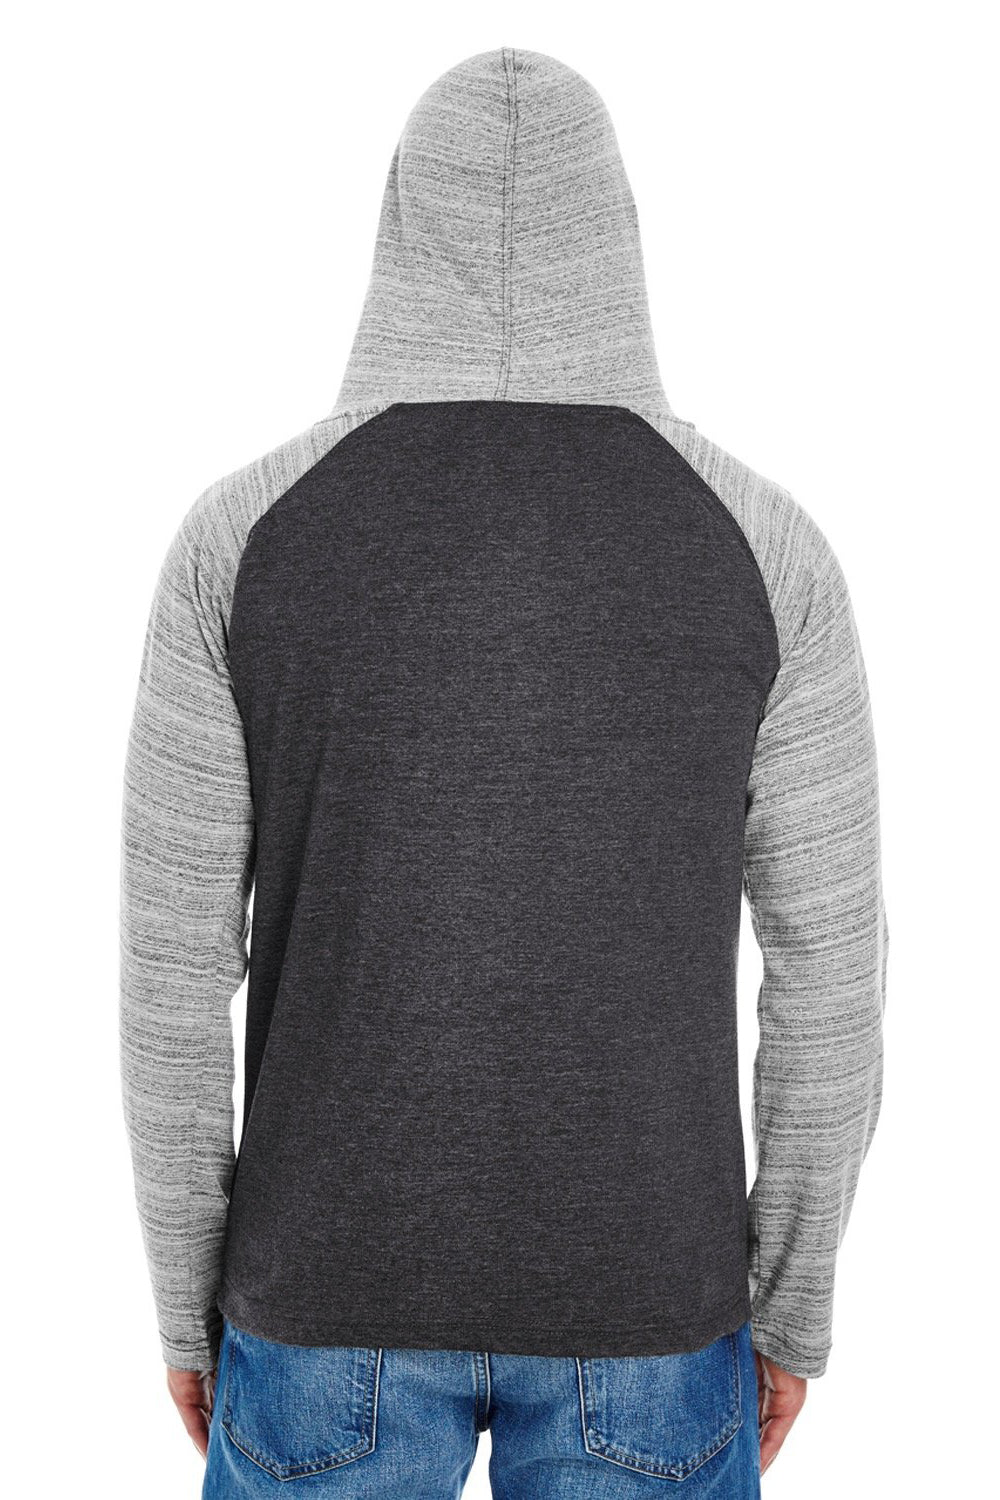 Burnside 8127 Mens Raglan Long Sleeve Hooded T-Shirt Hoodie Heather Charcoal/Charcoal Stripe Model Back